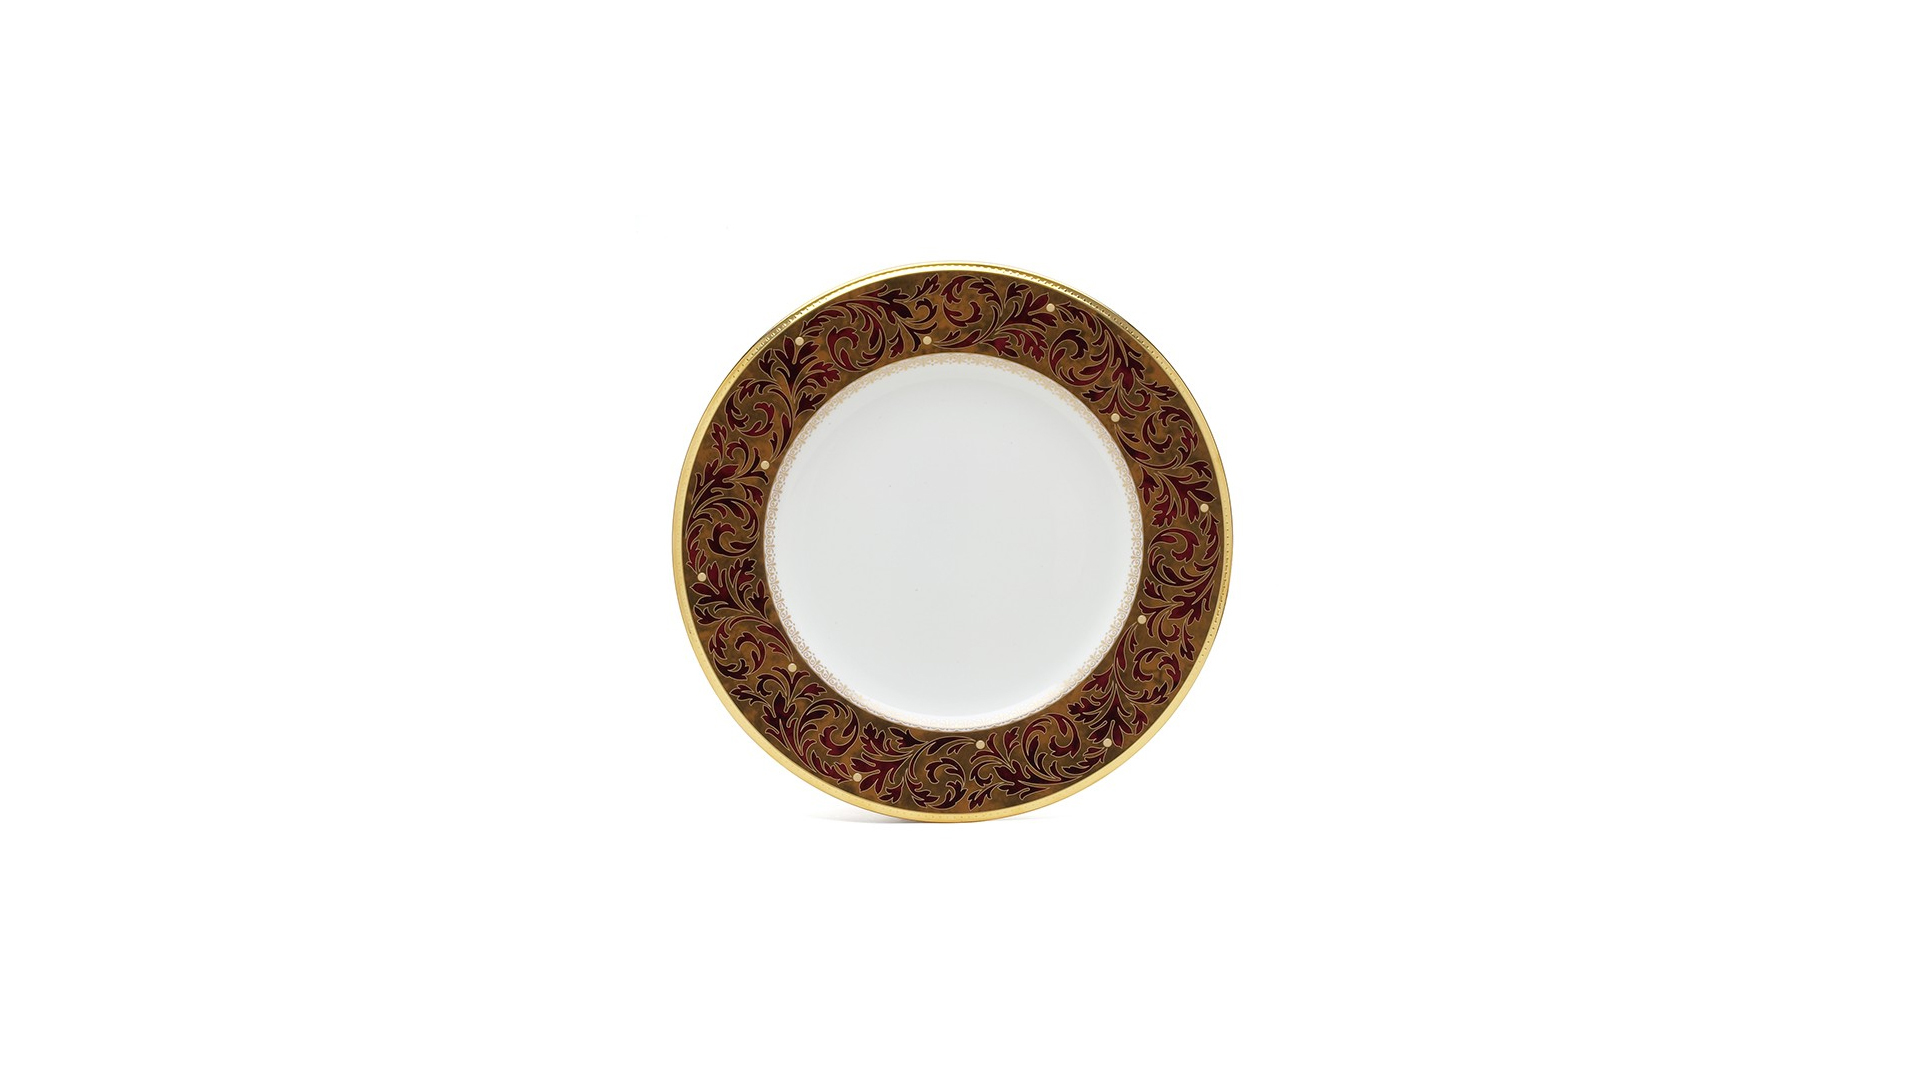 Тарелка обеденная Noritake Ксавьер, золотой кант 27 см, фарфор